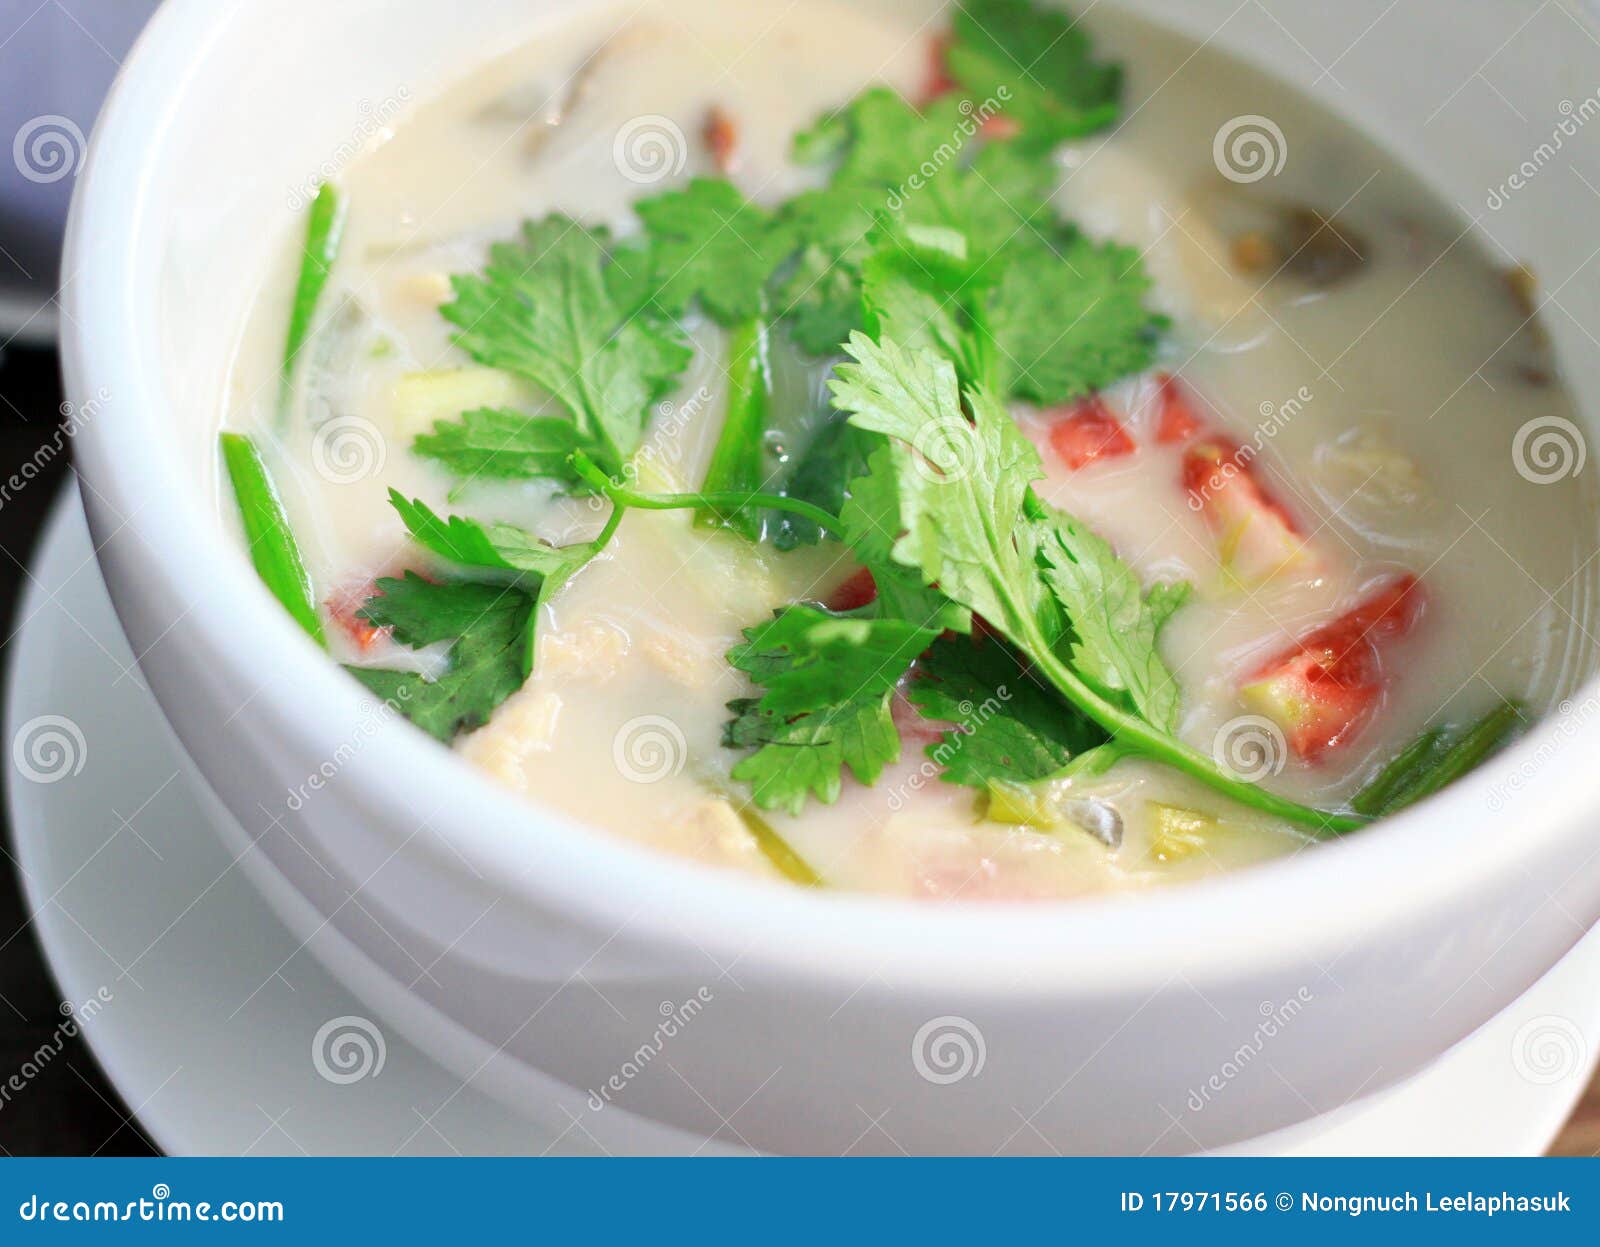 tom kha kai, thai soup